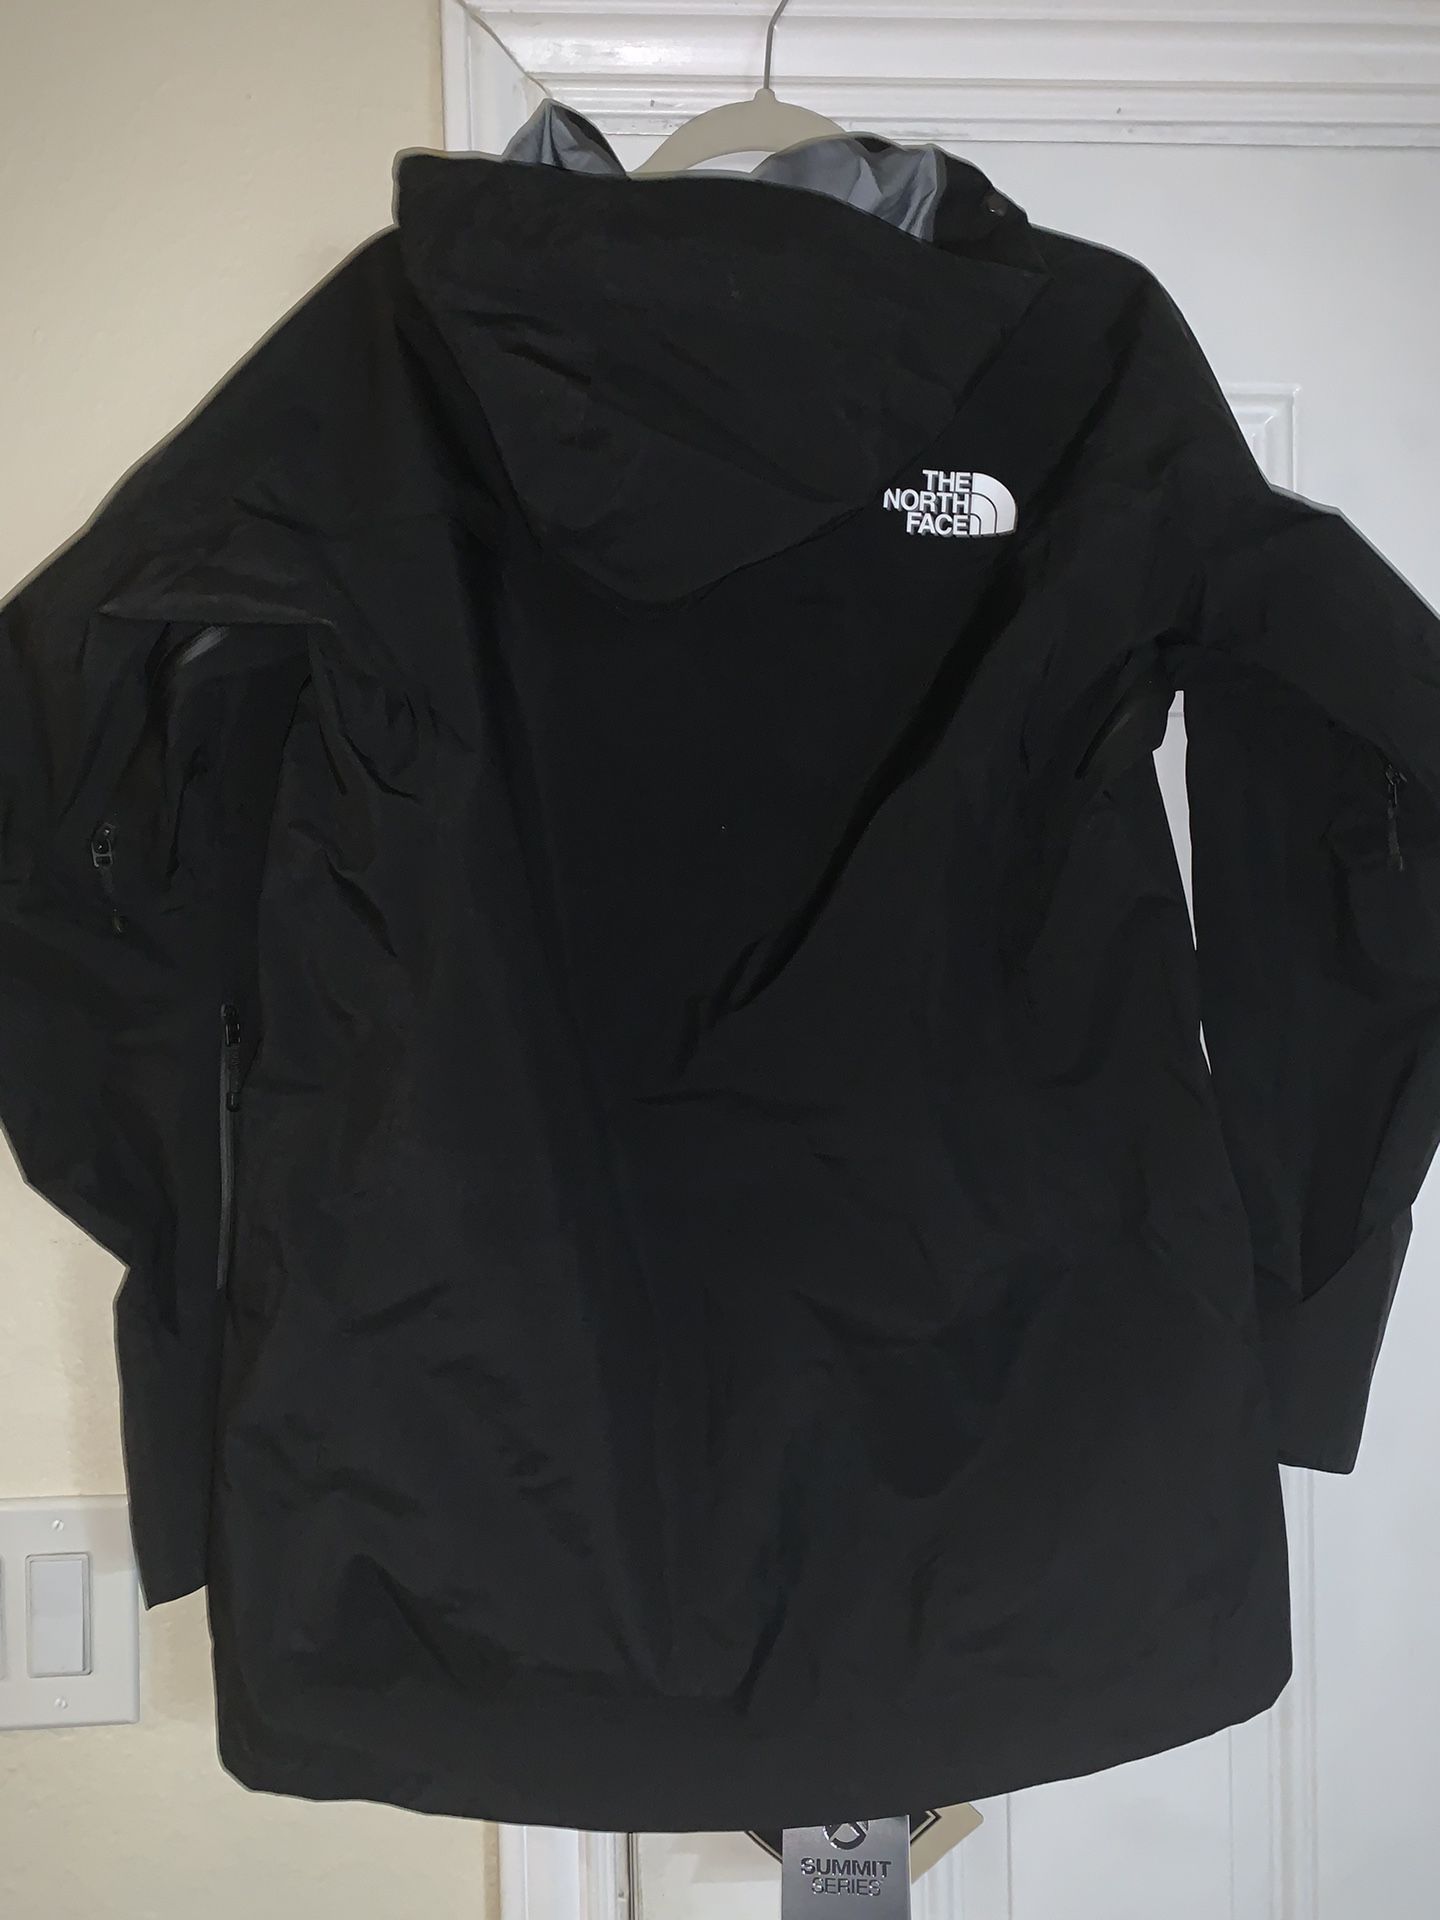 The North Face Womens Jacket Tsirku size L